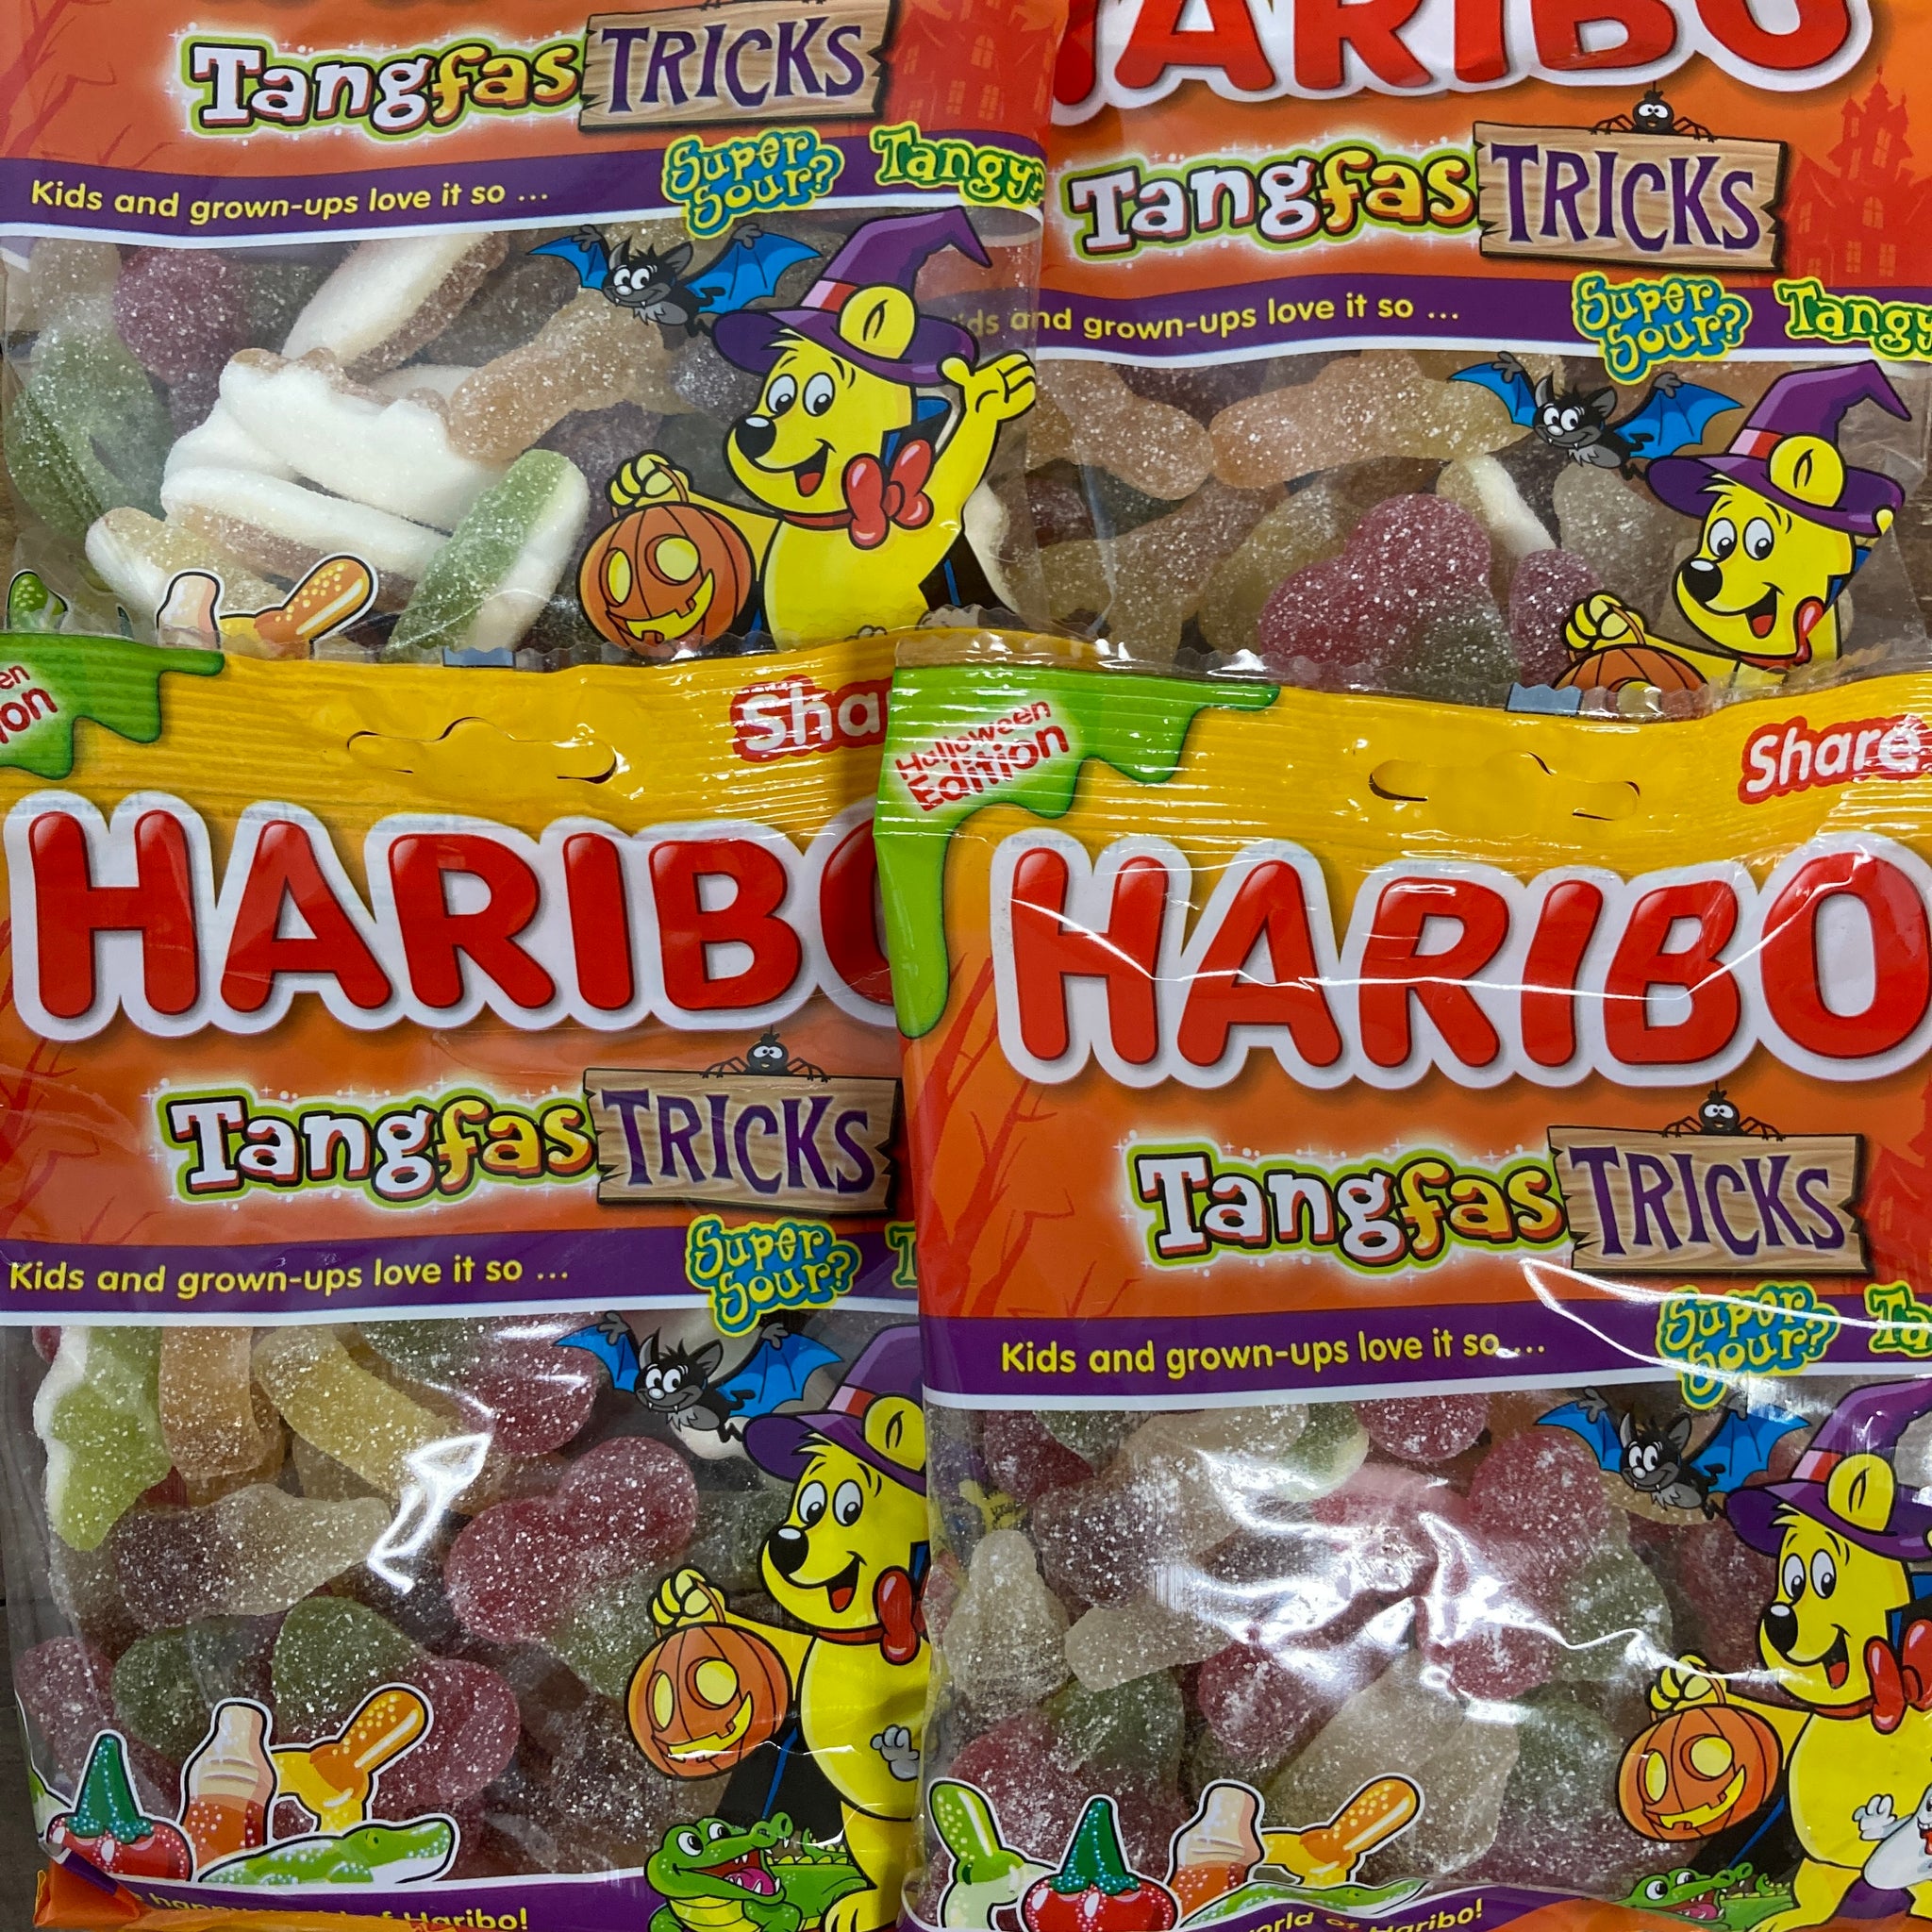 1kg of Haribo Tangfastics - Tangfastricks (6x 175g Share Bags